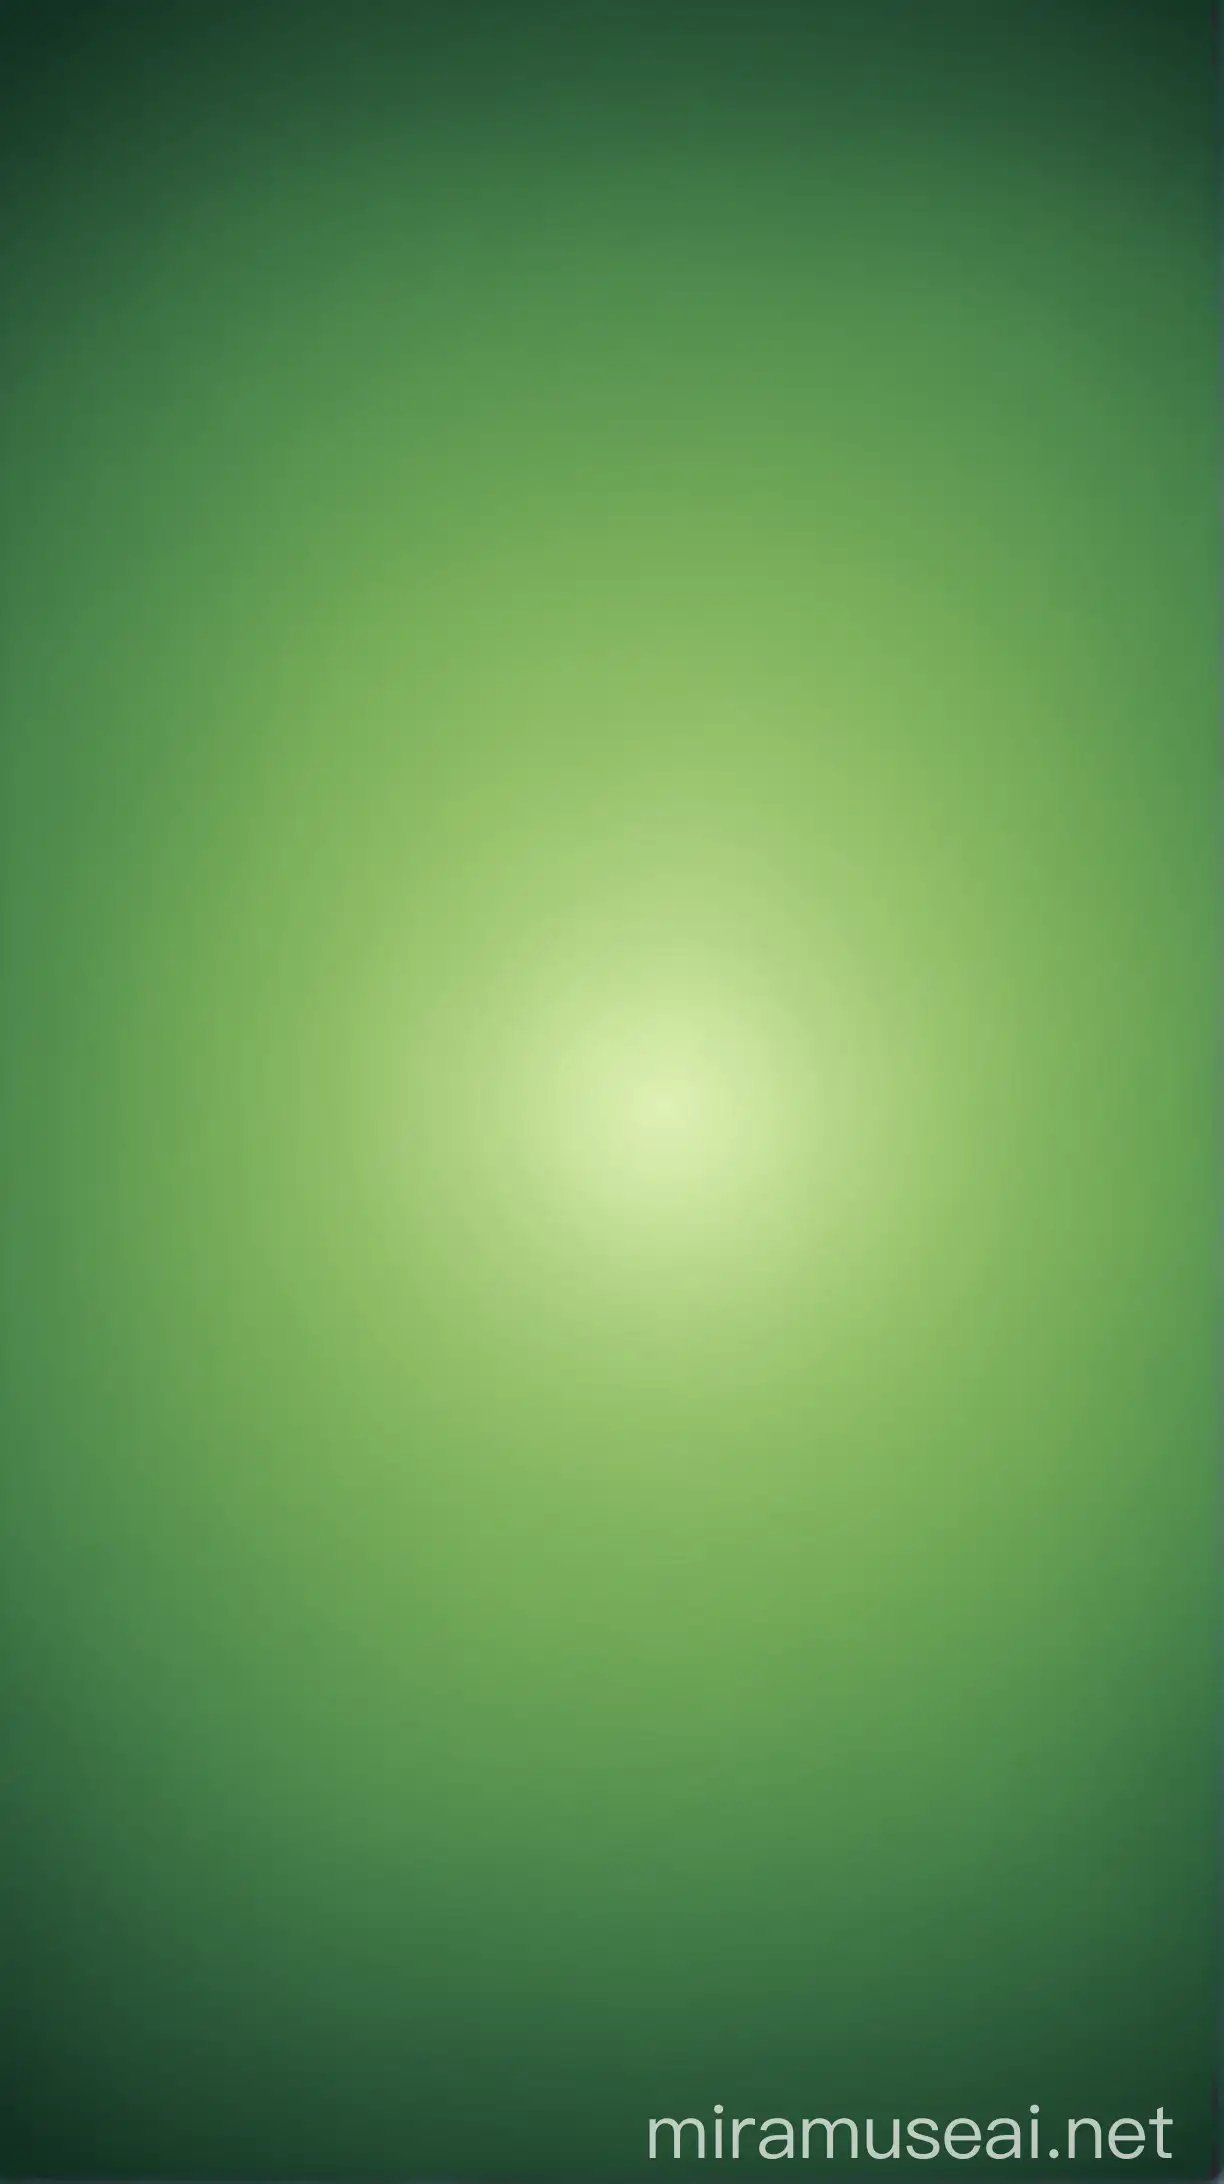 Green Radial Gradient Background with Dark Center